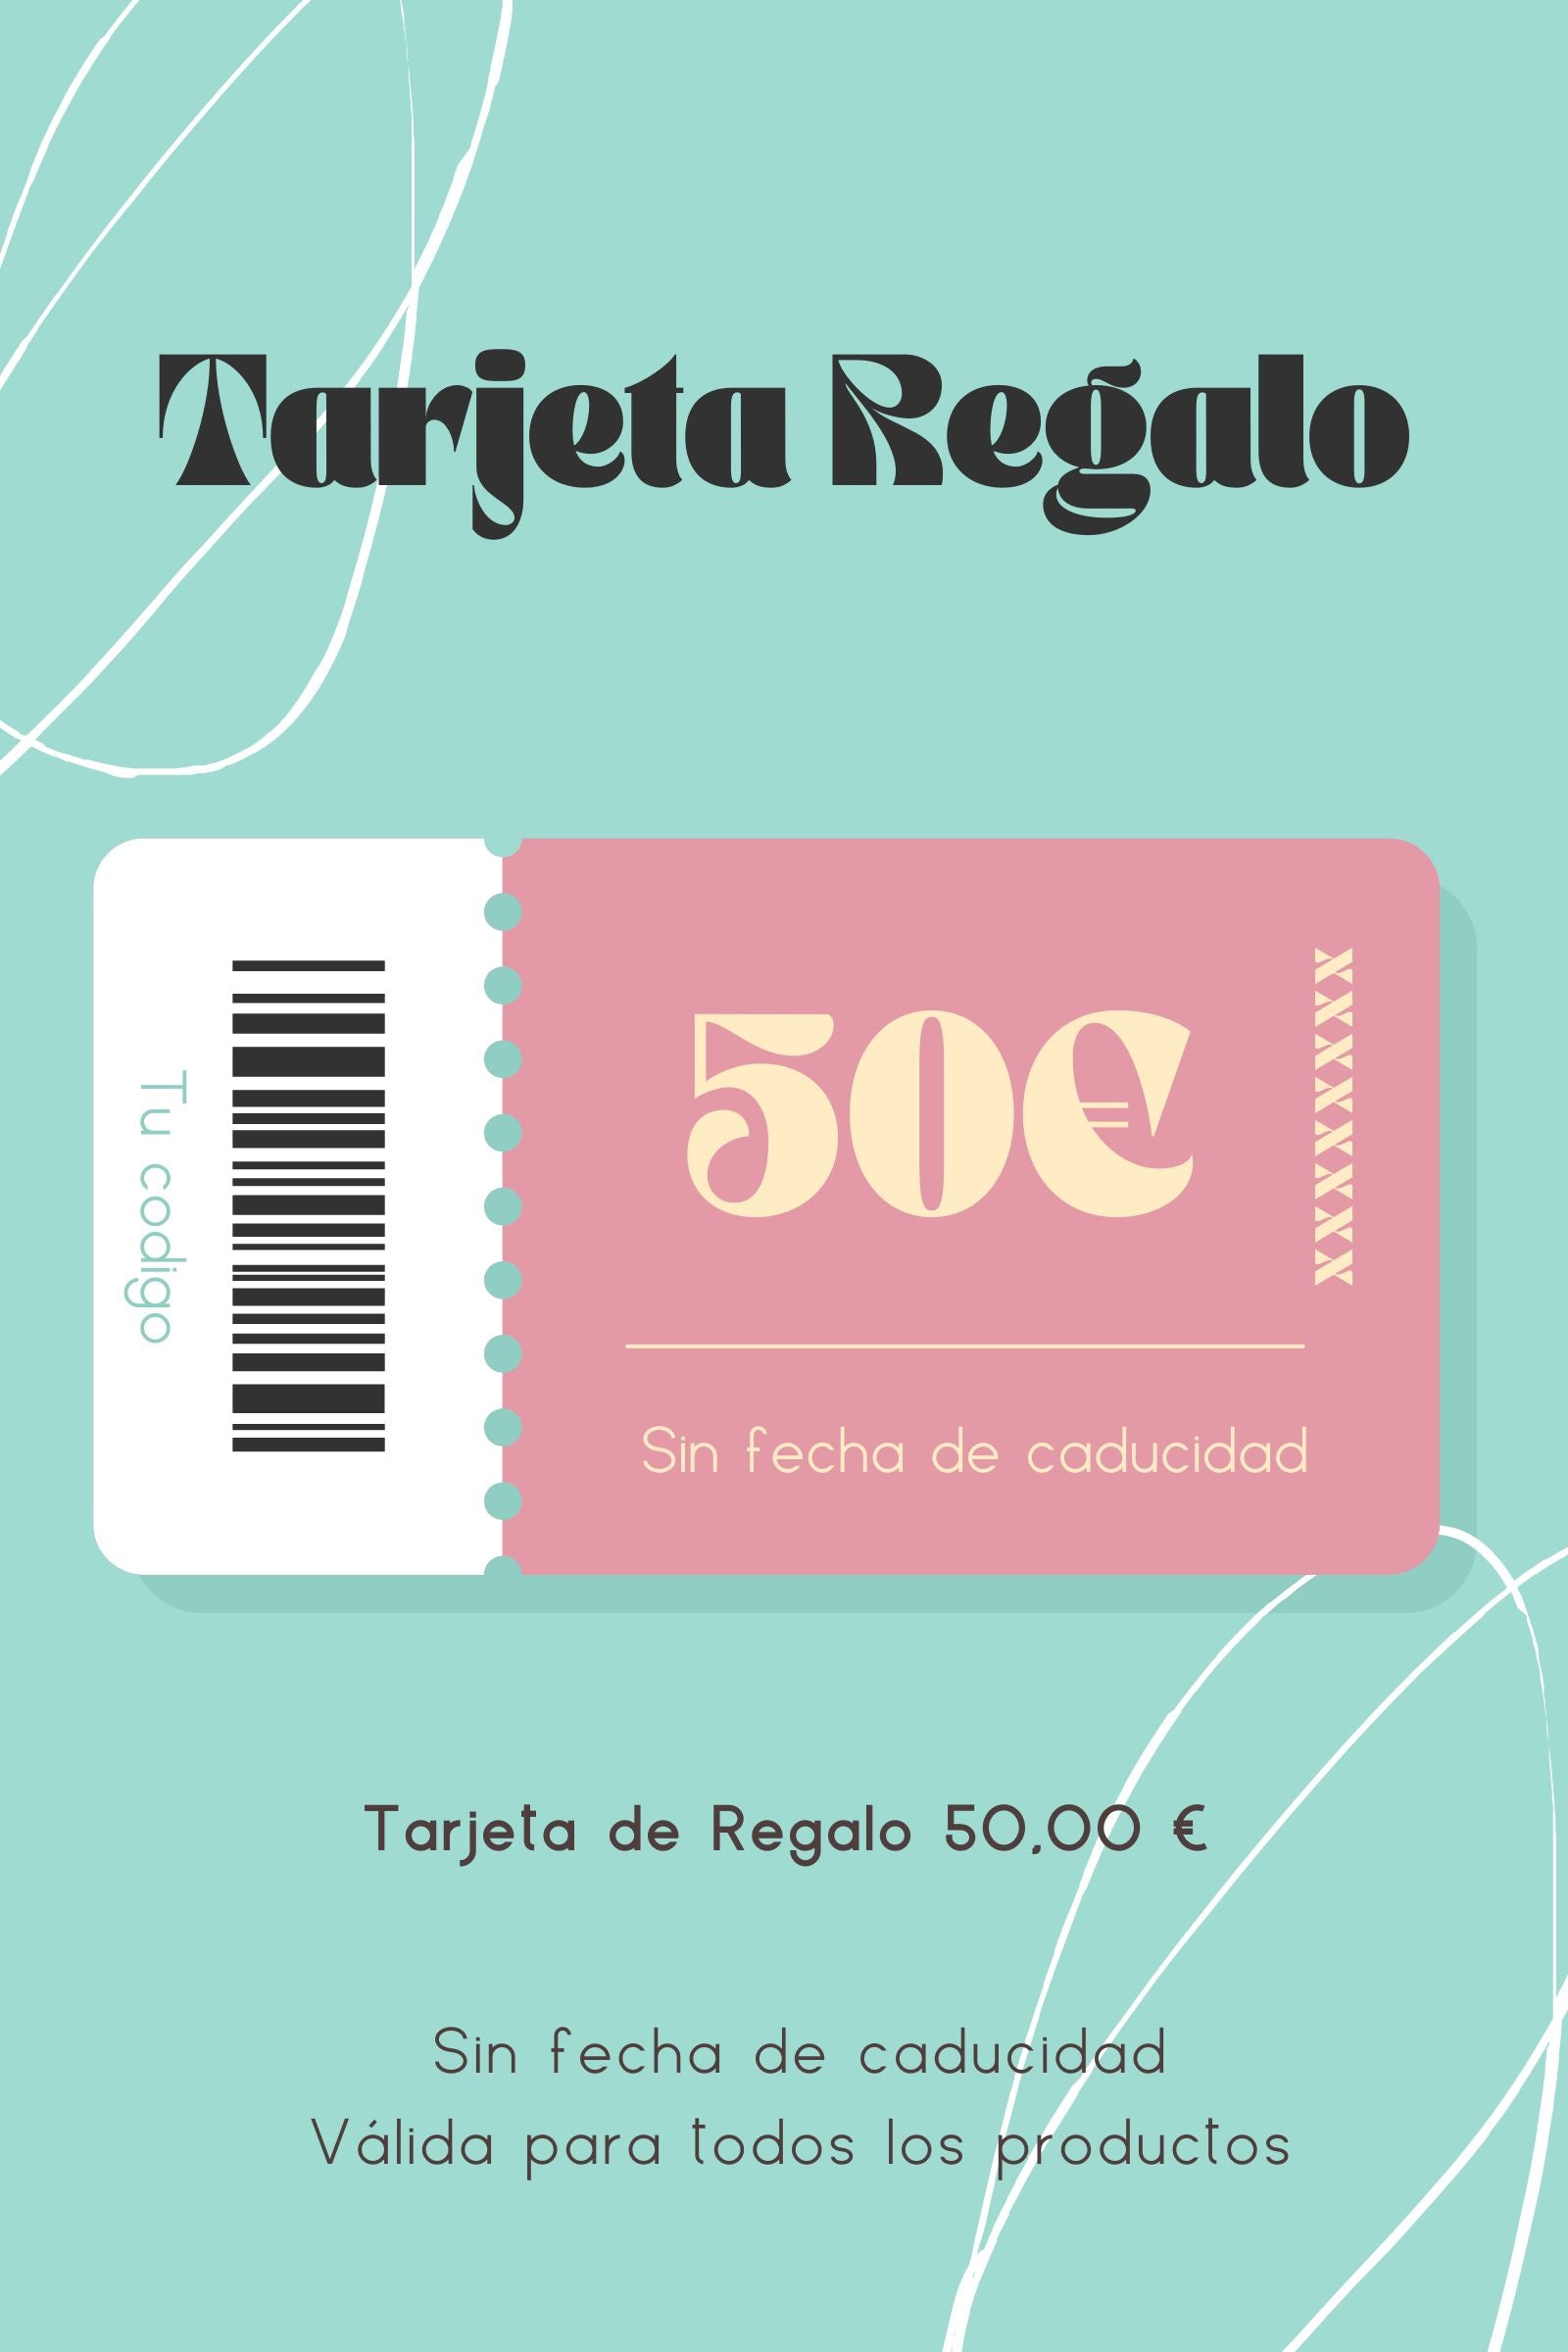 Tarjeta de Regalo 50,00 € Lolitas&L - lolitasyl.com